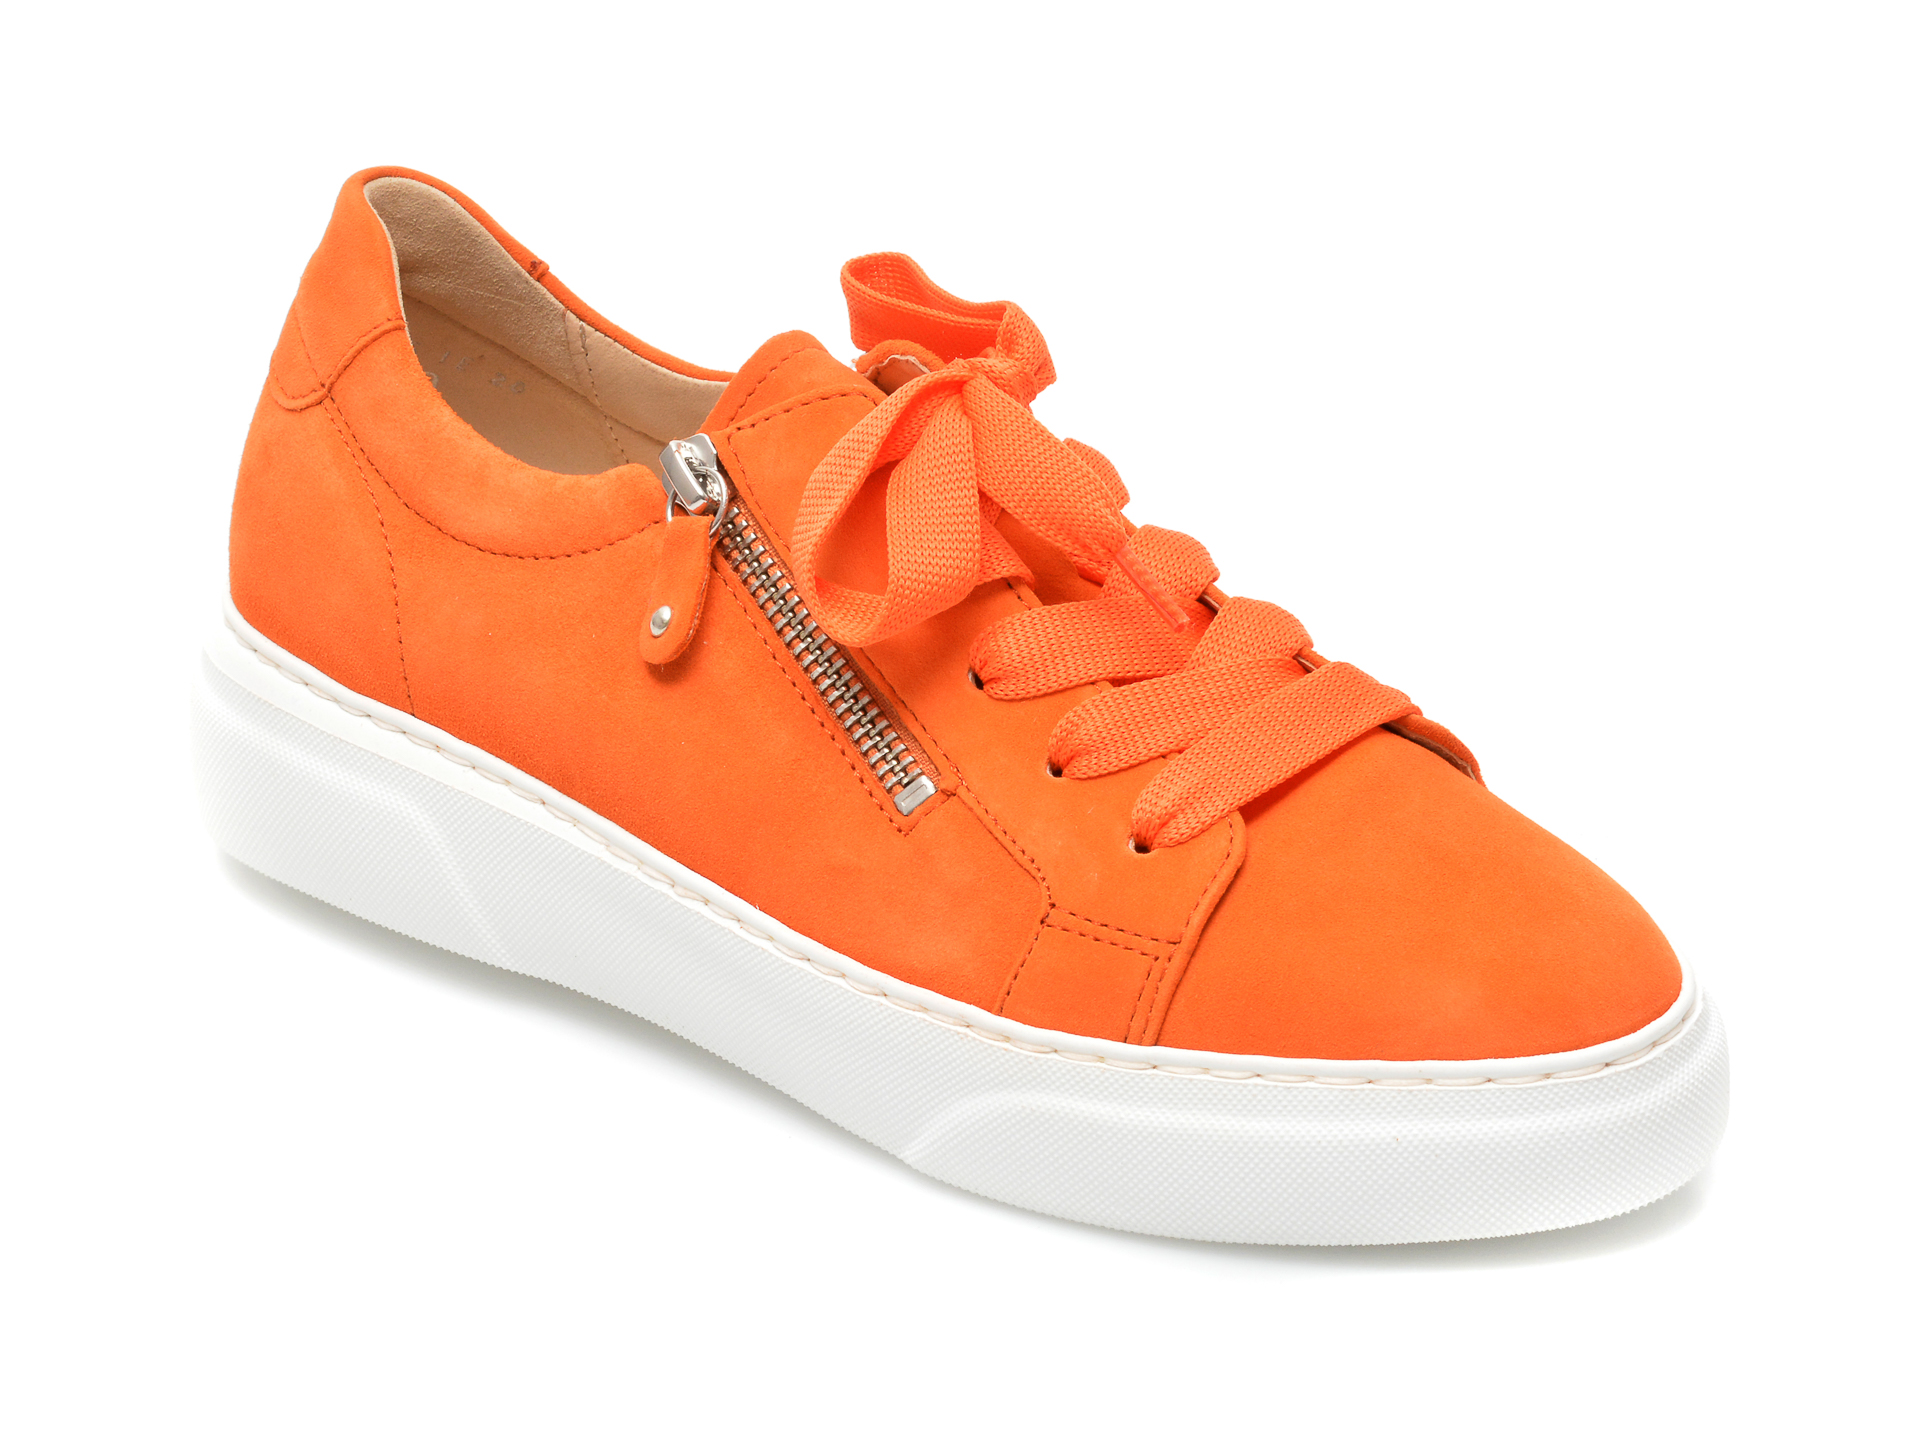 Pantofi GABOR portocalii, 43314, din piele intoarsa Gabor Gabor